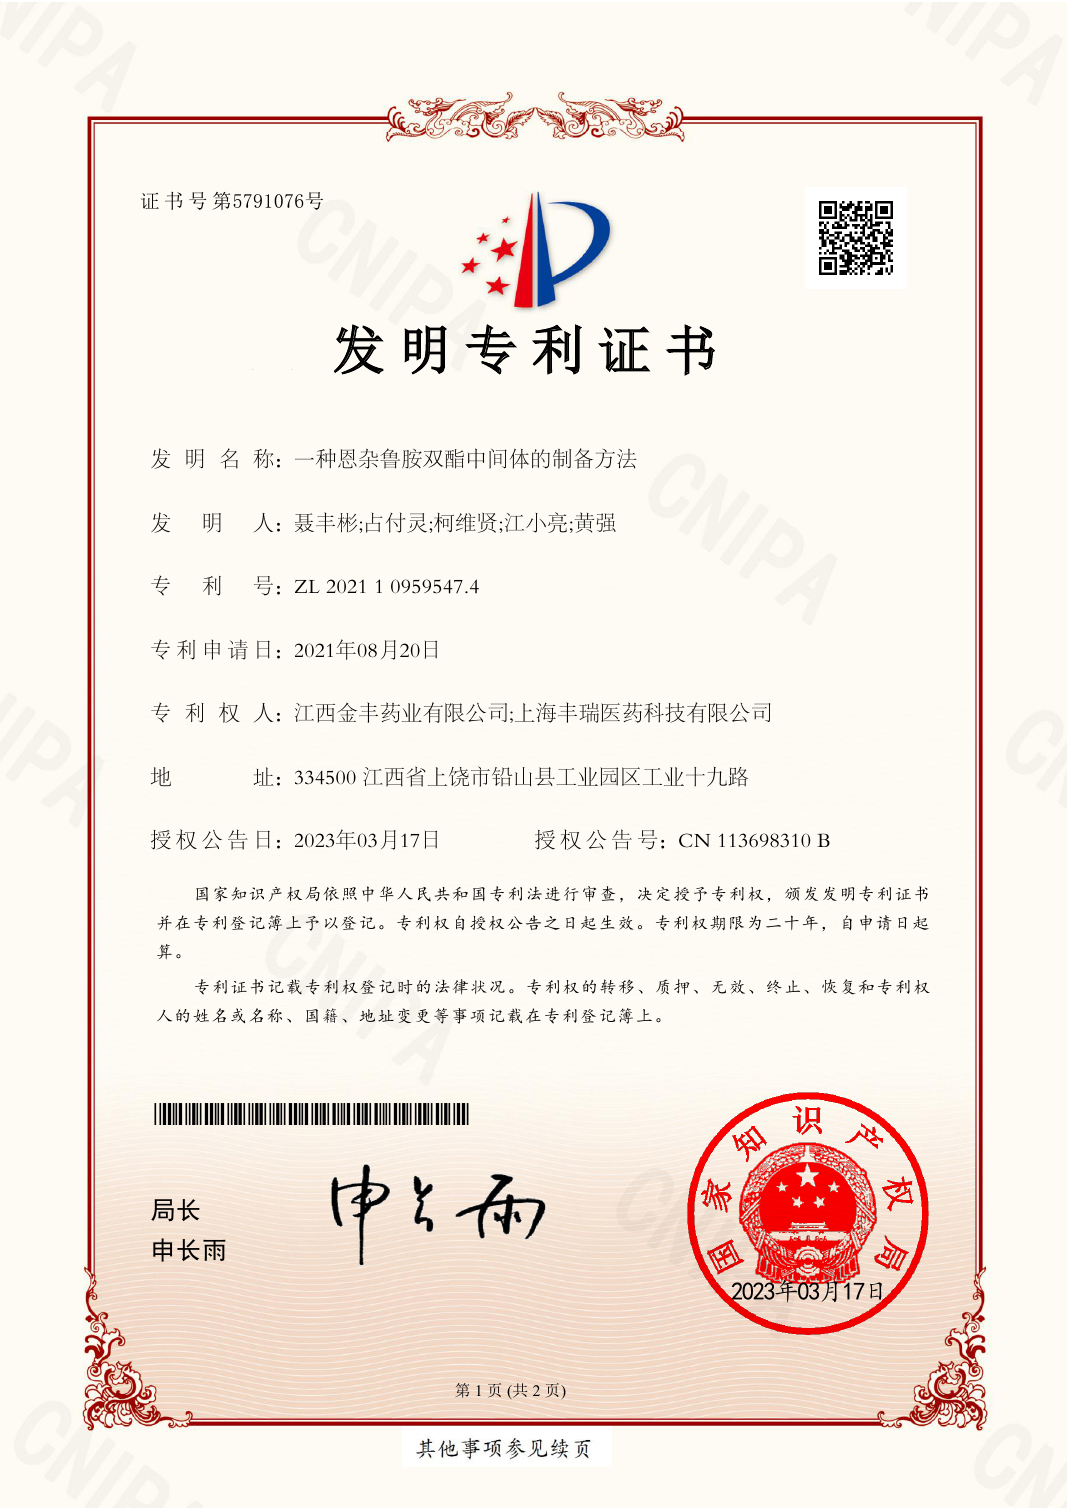 202111680492X Invention Patent Certificate Imide(signature)